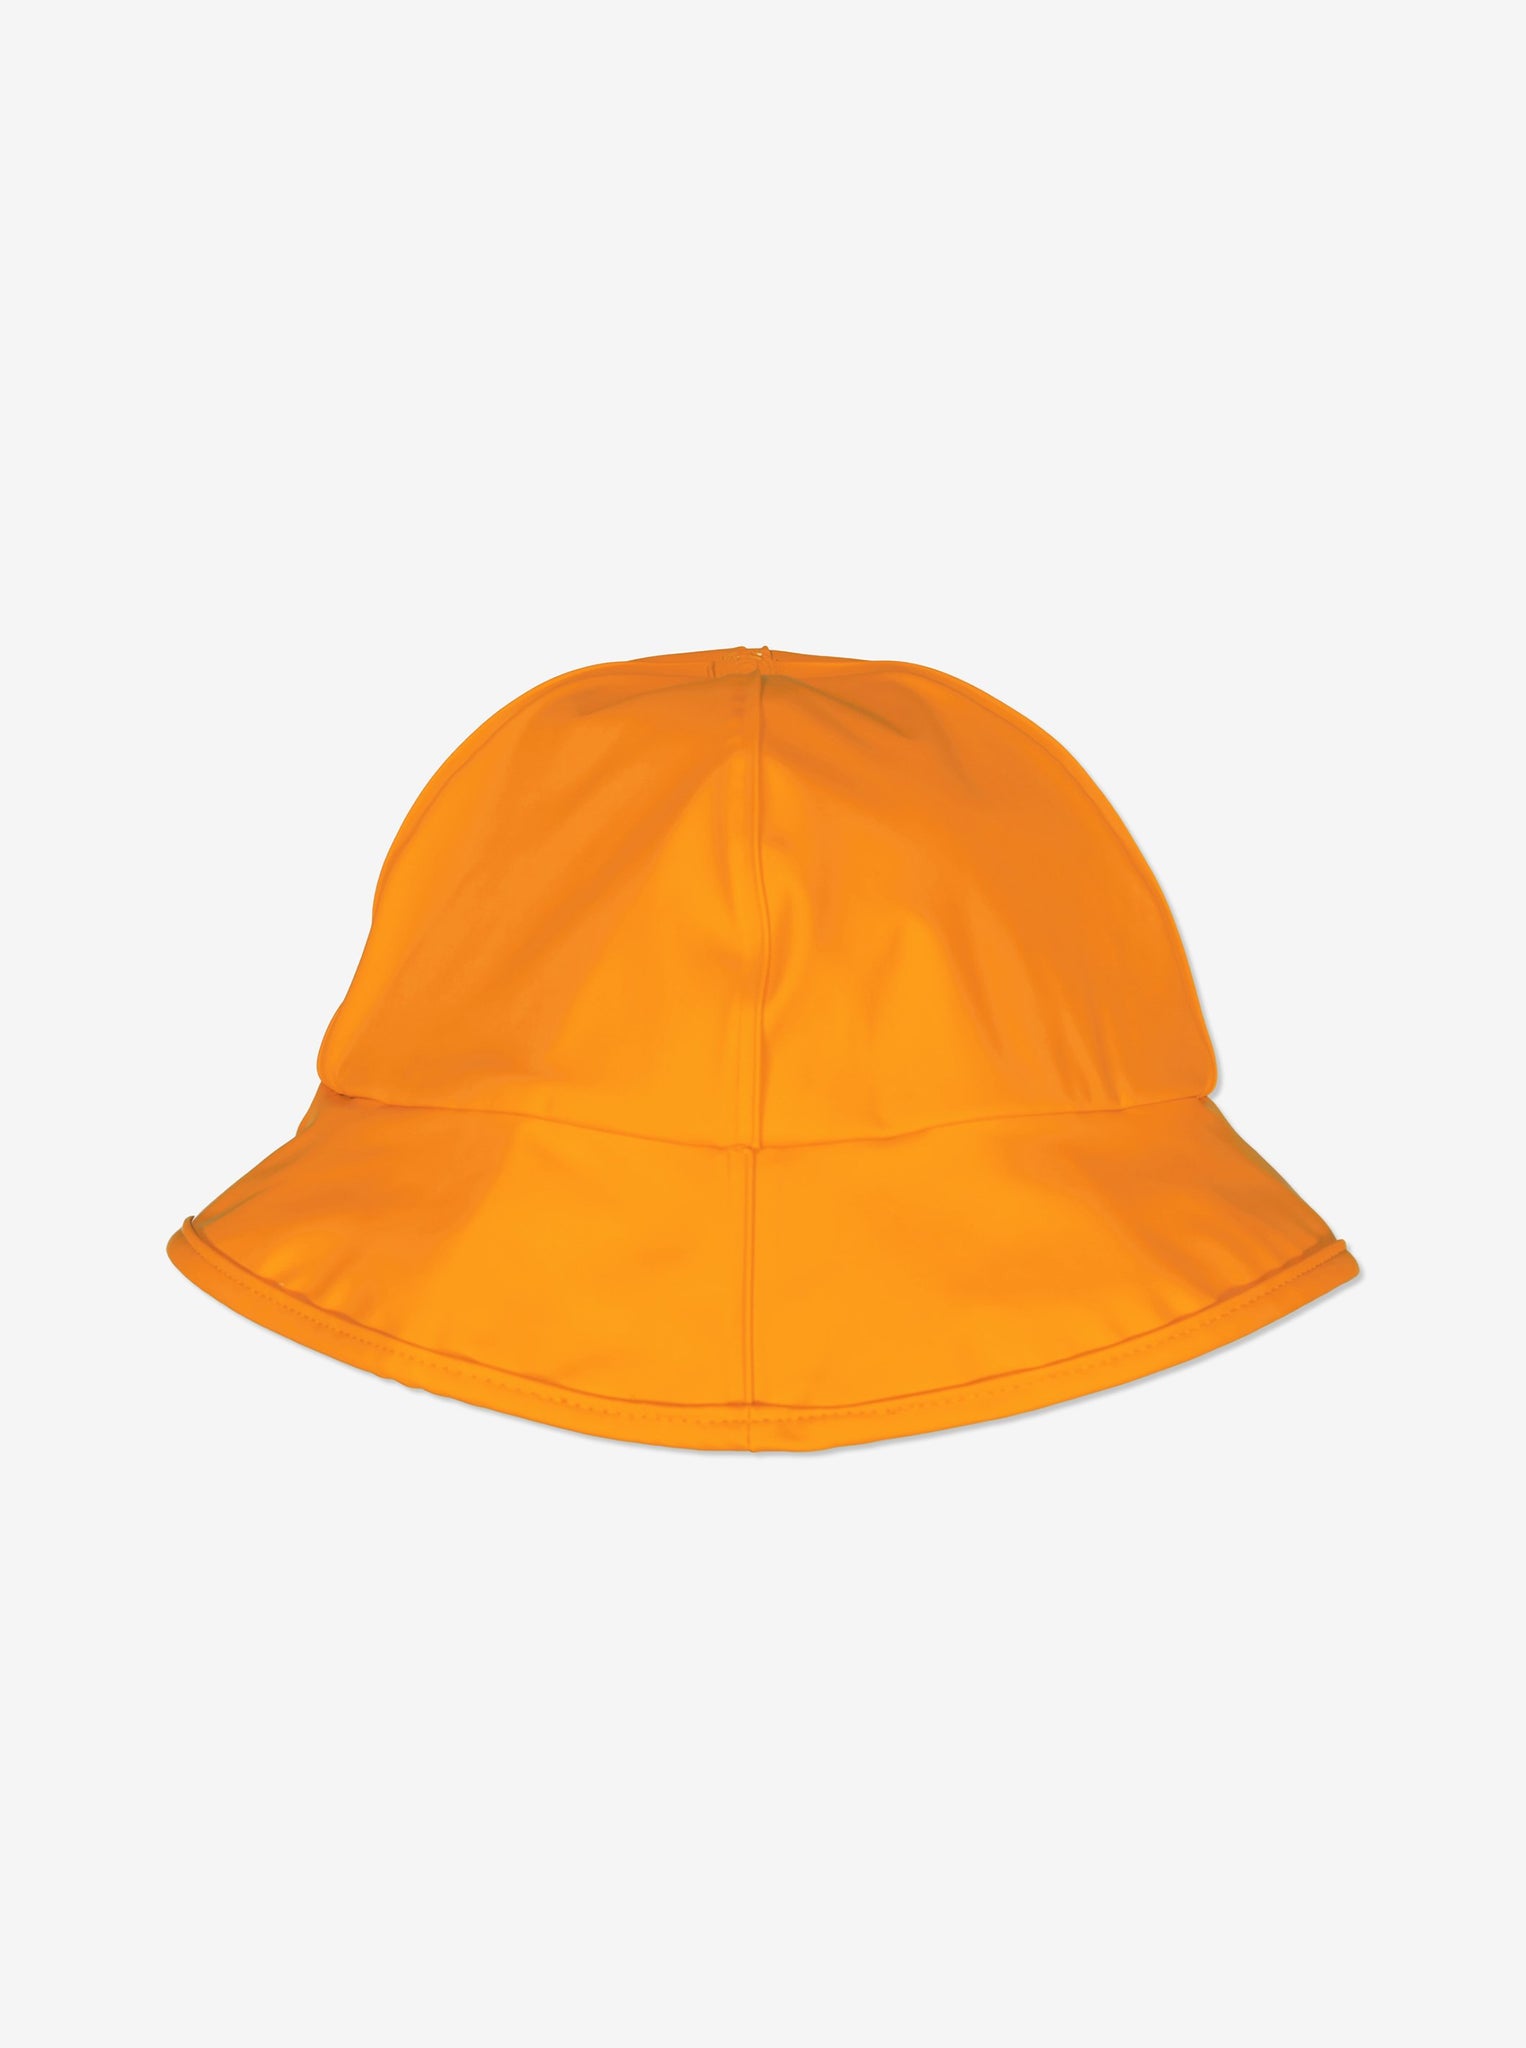 Orange Waterproof Kids Rain Hat from Polarn O. Pyret Kidswear. Kids rainhat in Orange